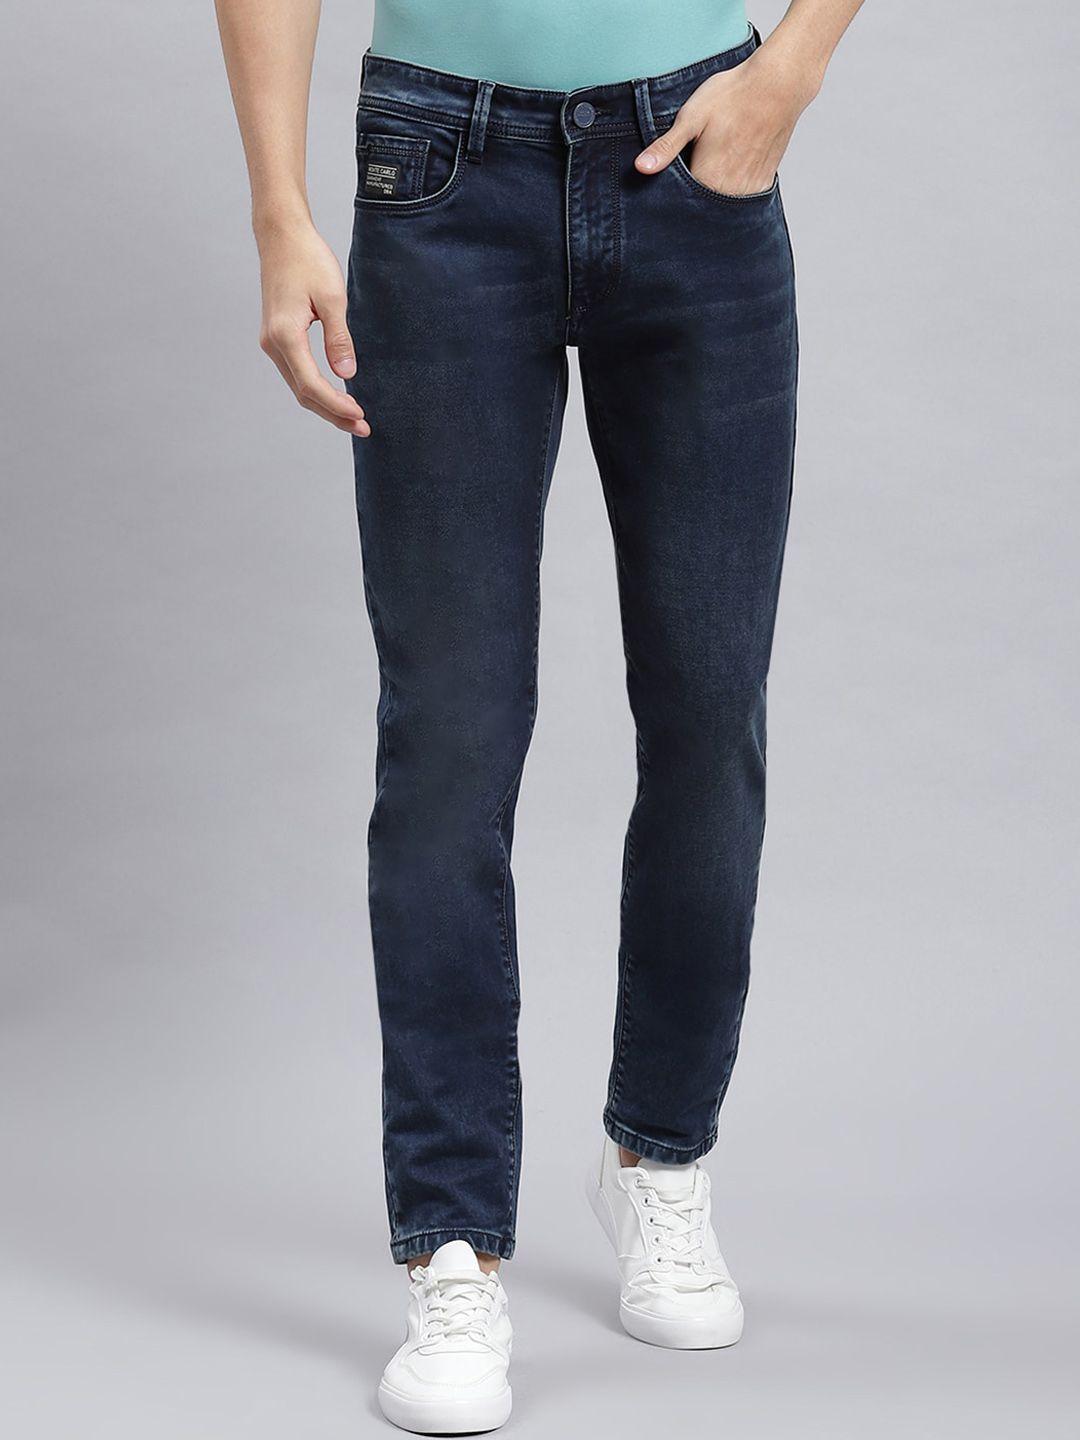 monte carlo men smart mid-rise skinny fit jeans